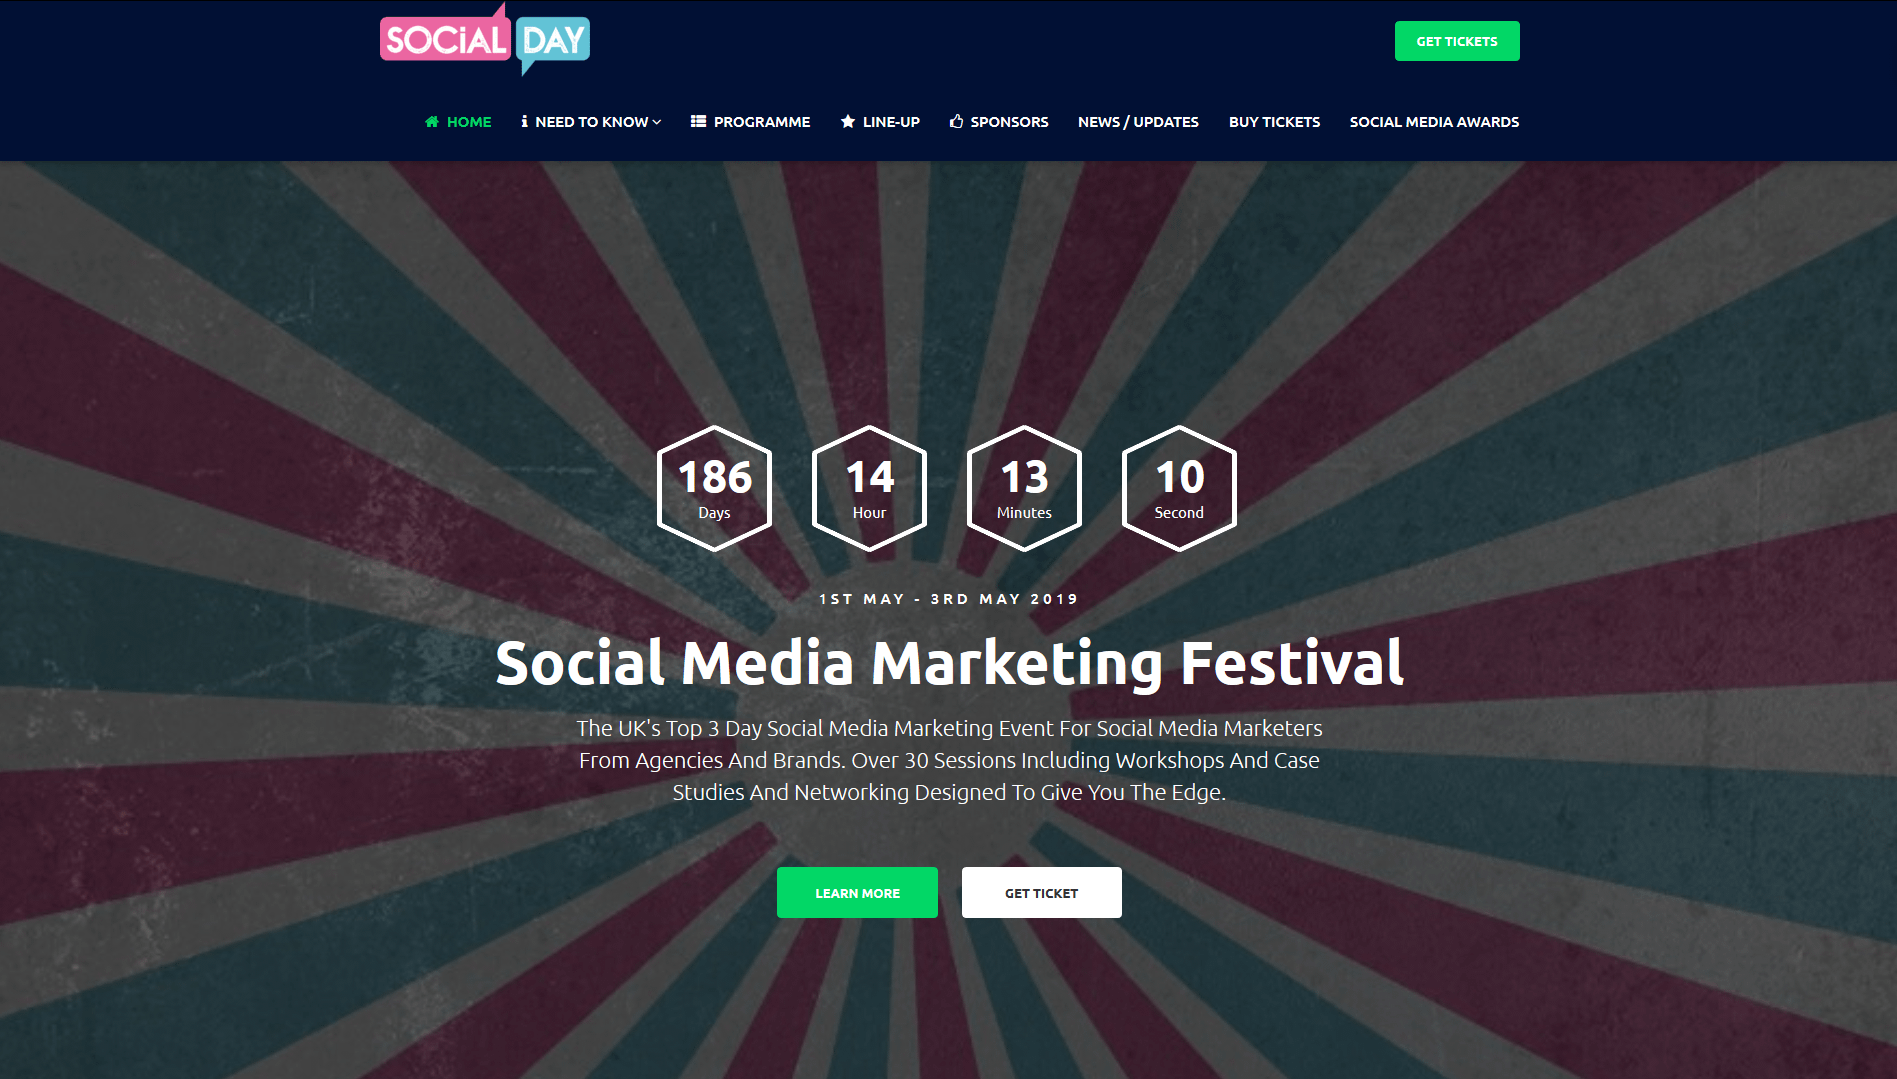 Social Day is the UK premier social media conference